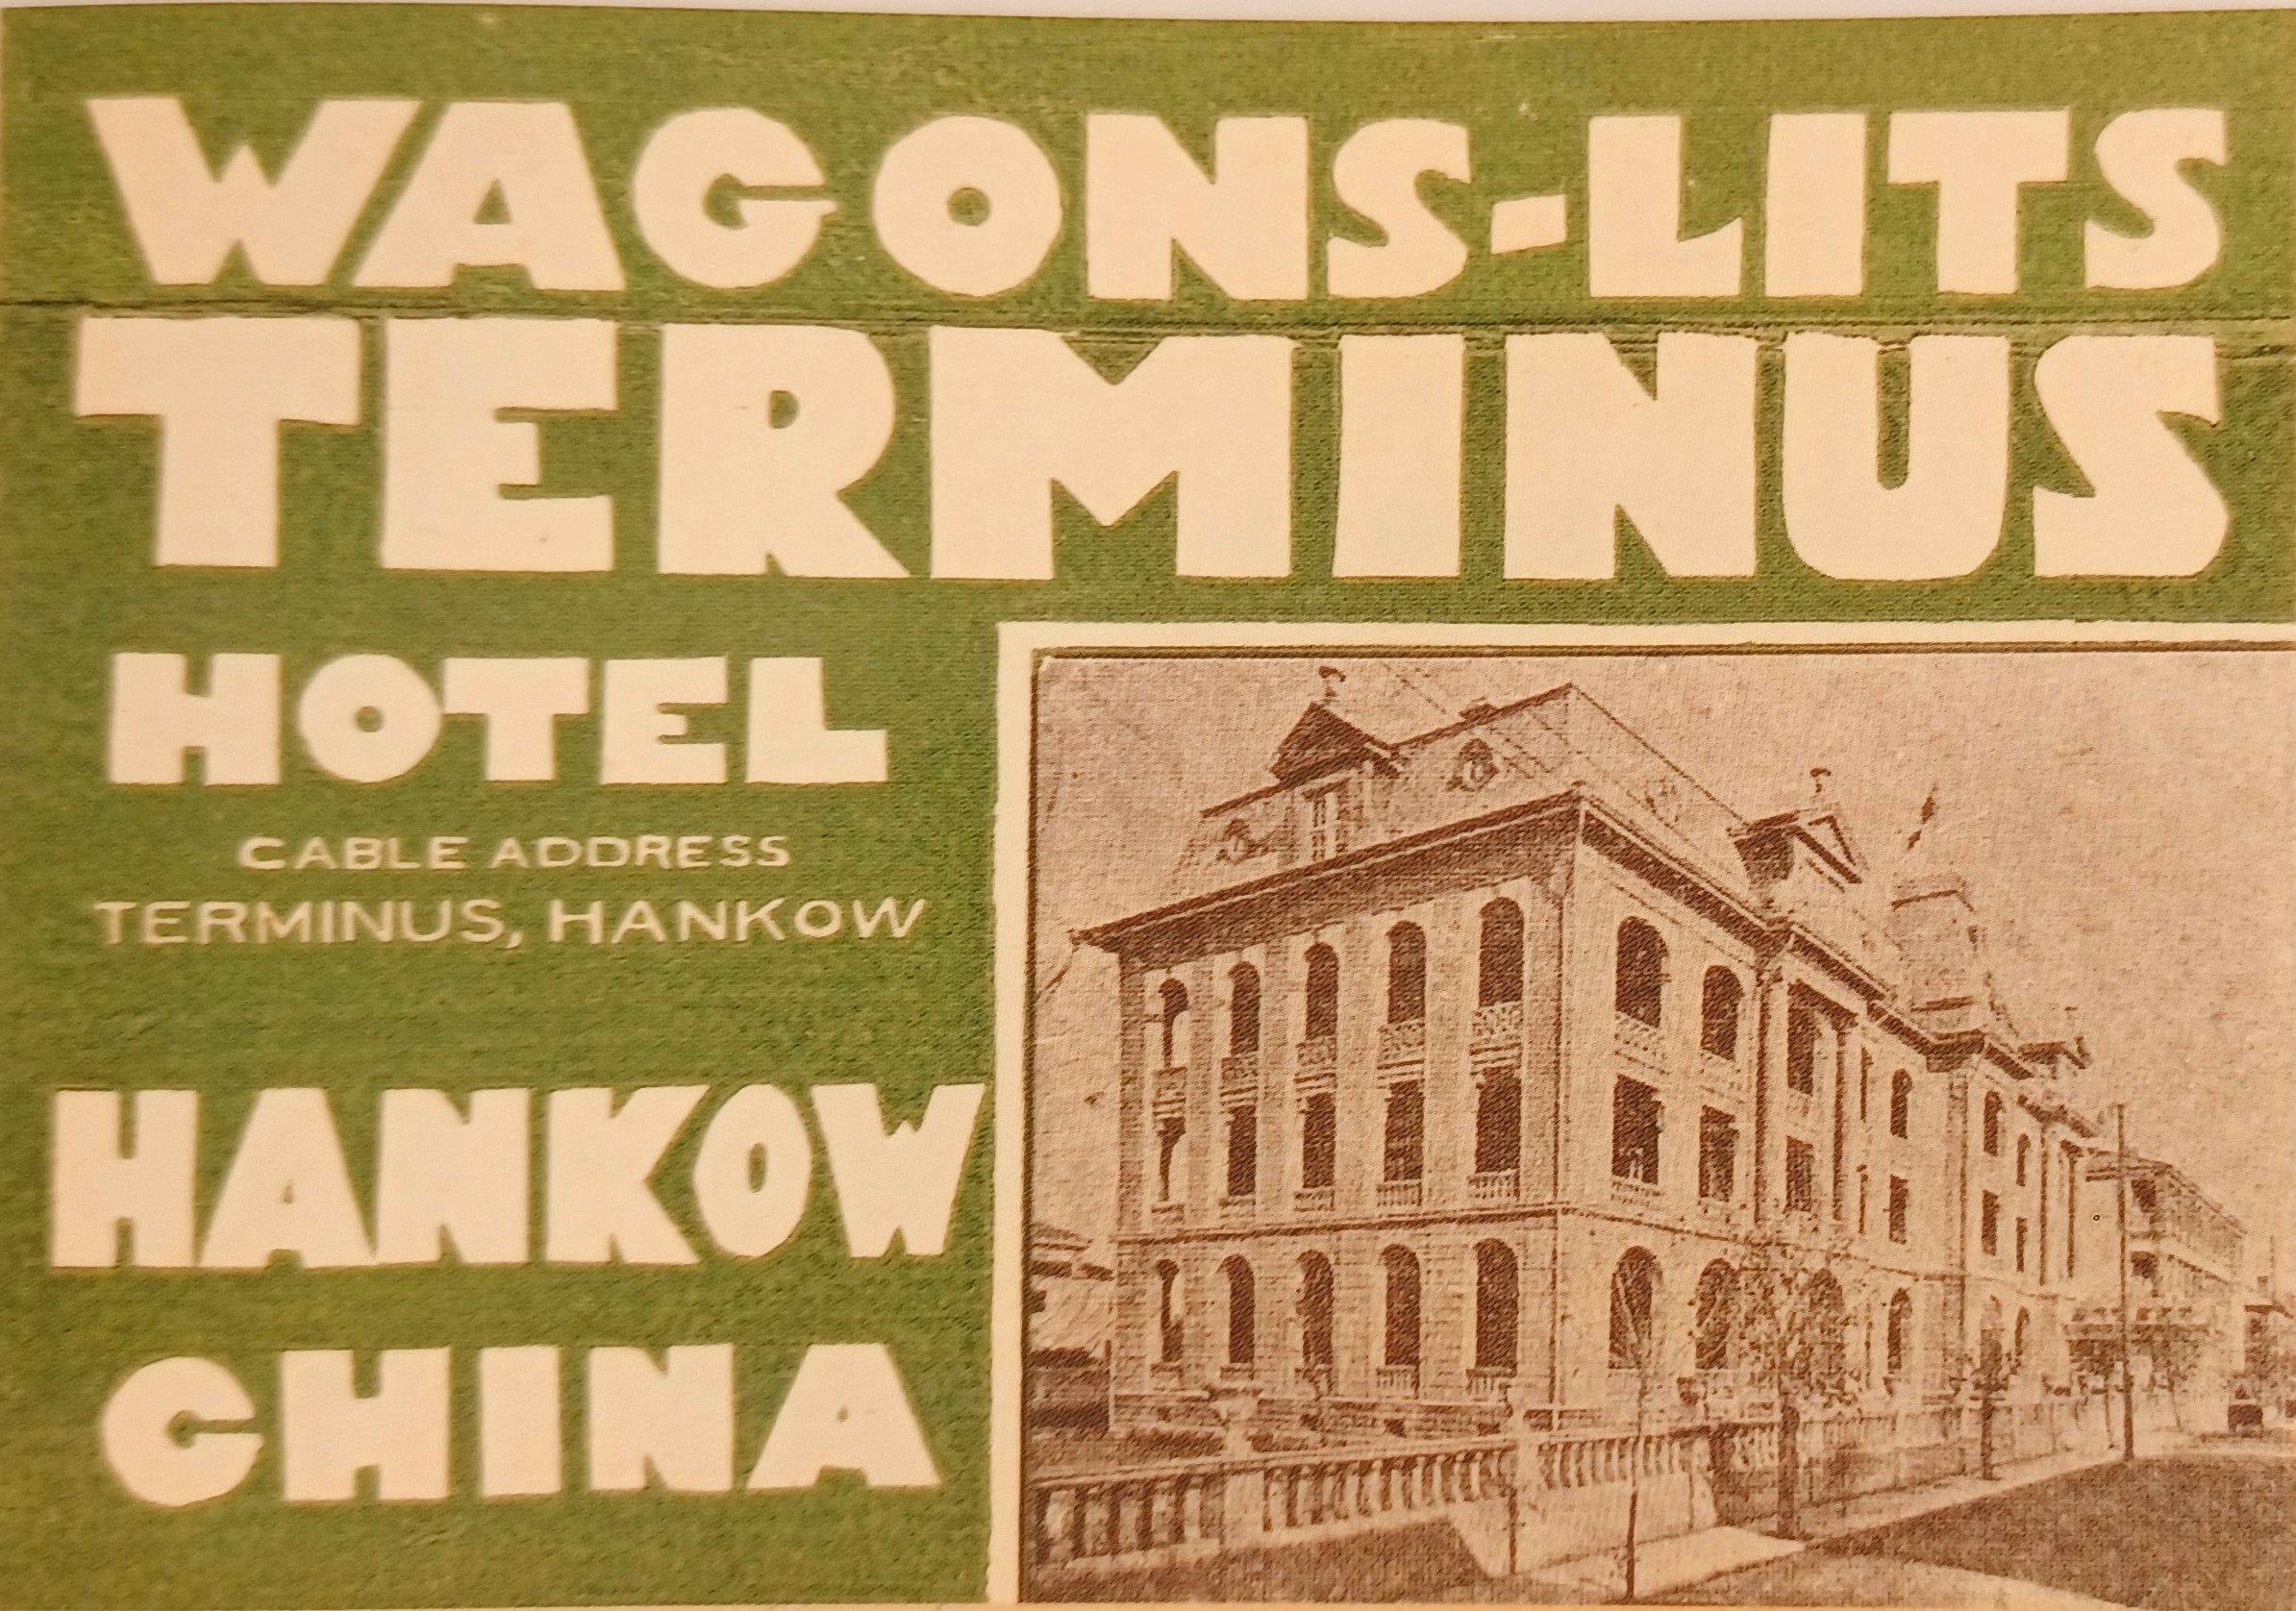 Wl hotel hankow etiquette chine vers 1922